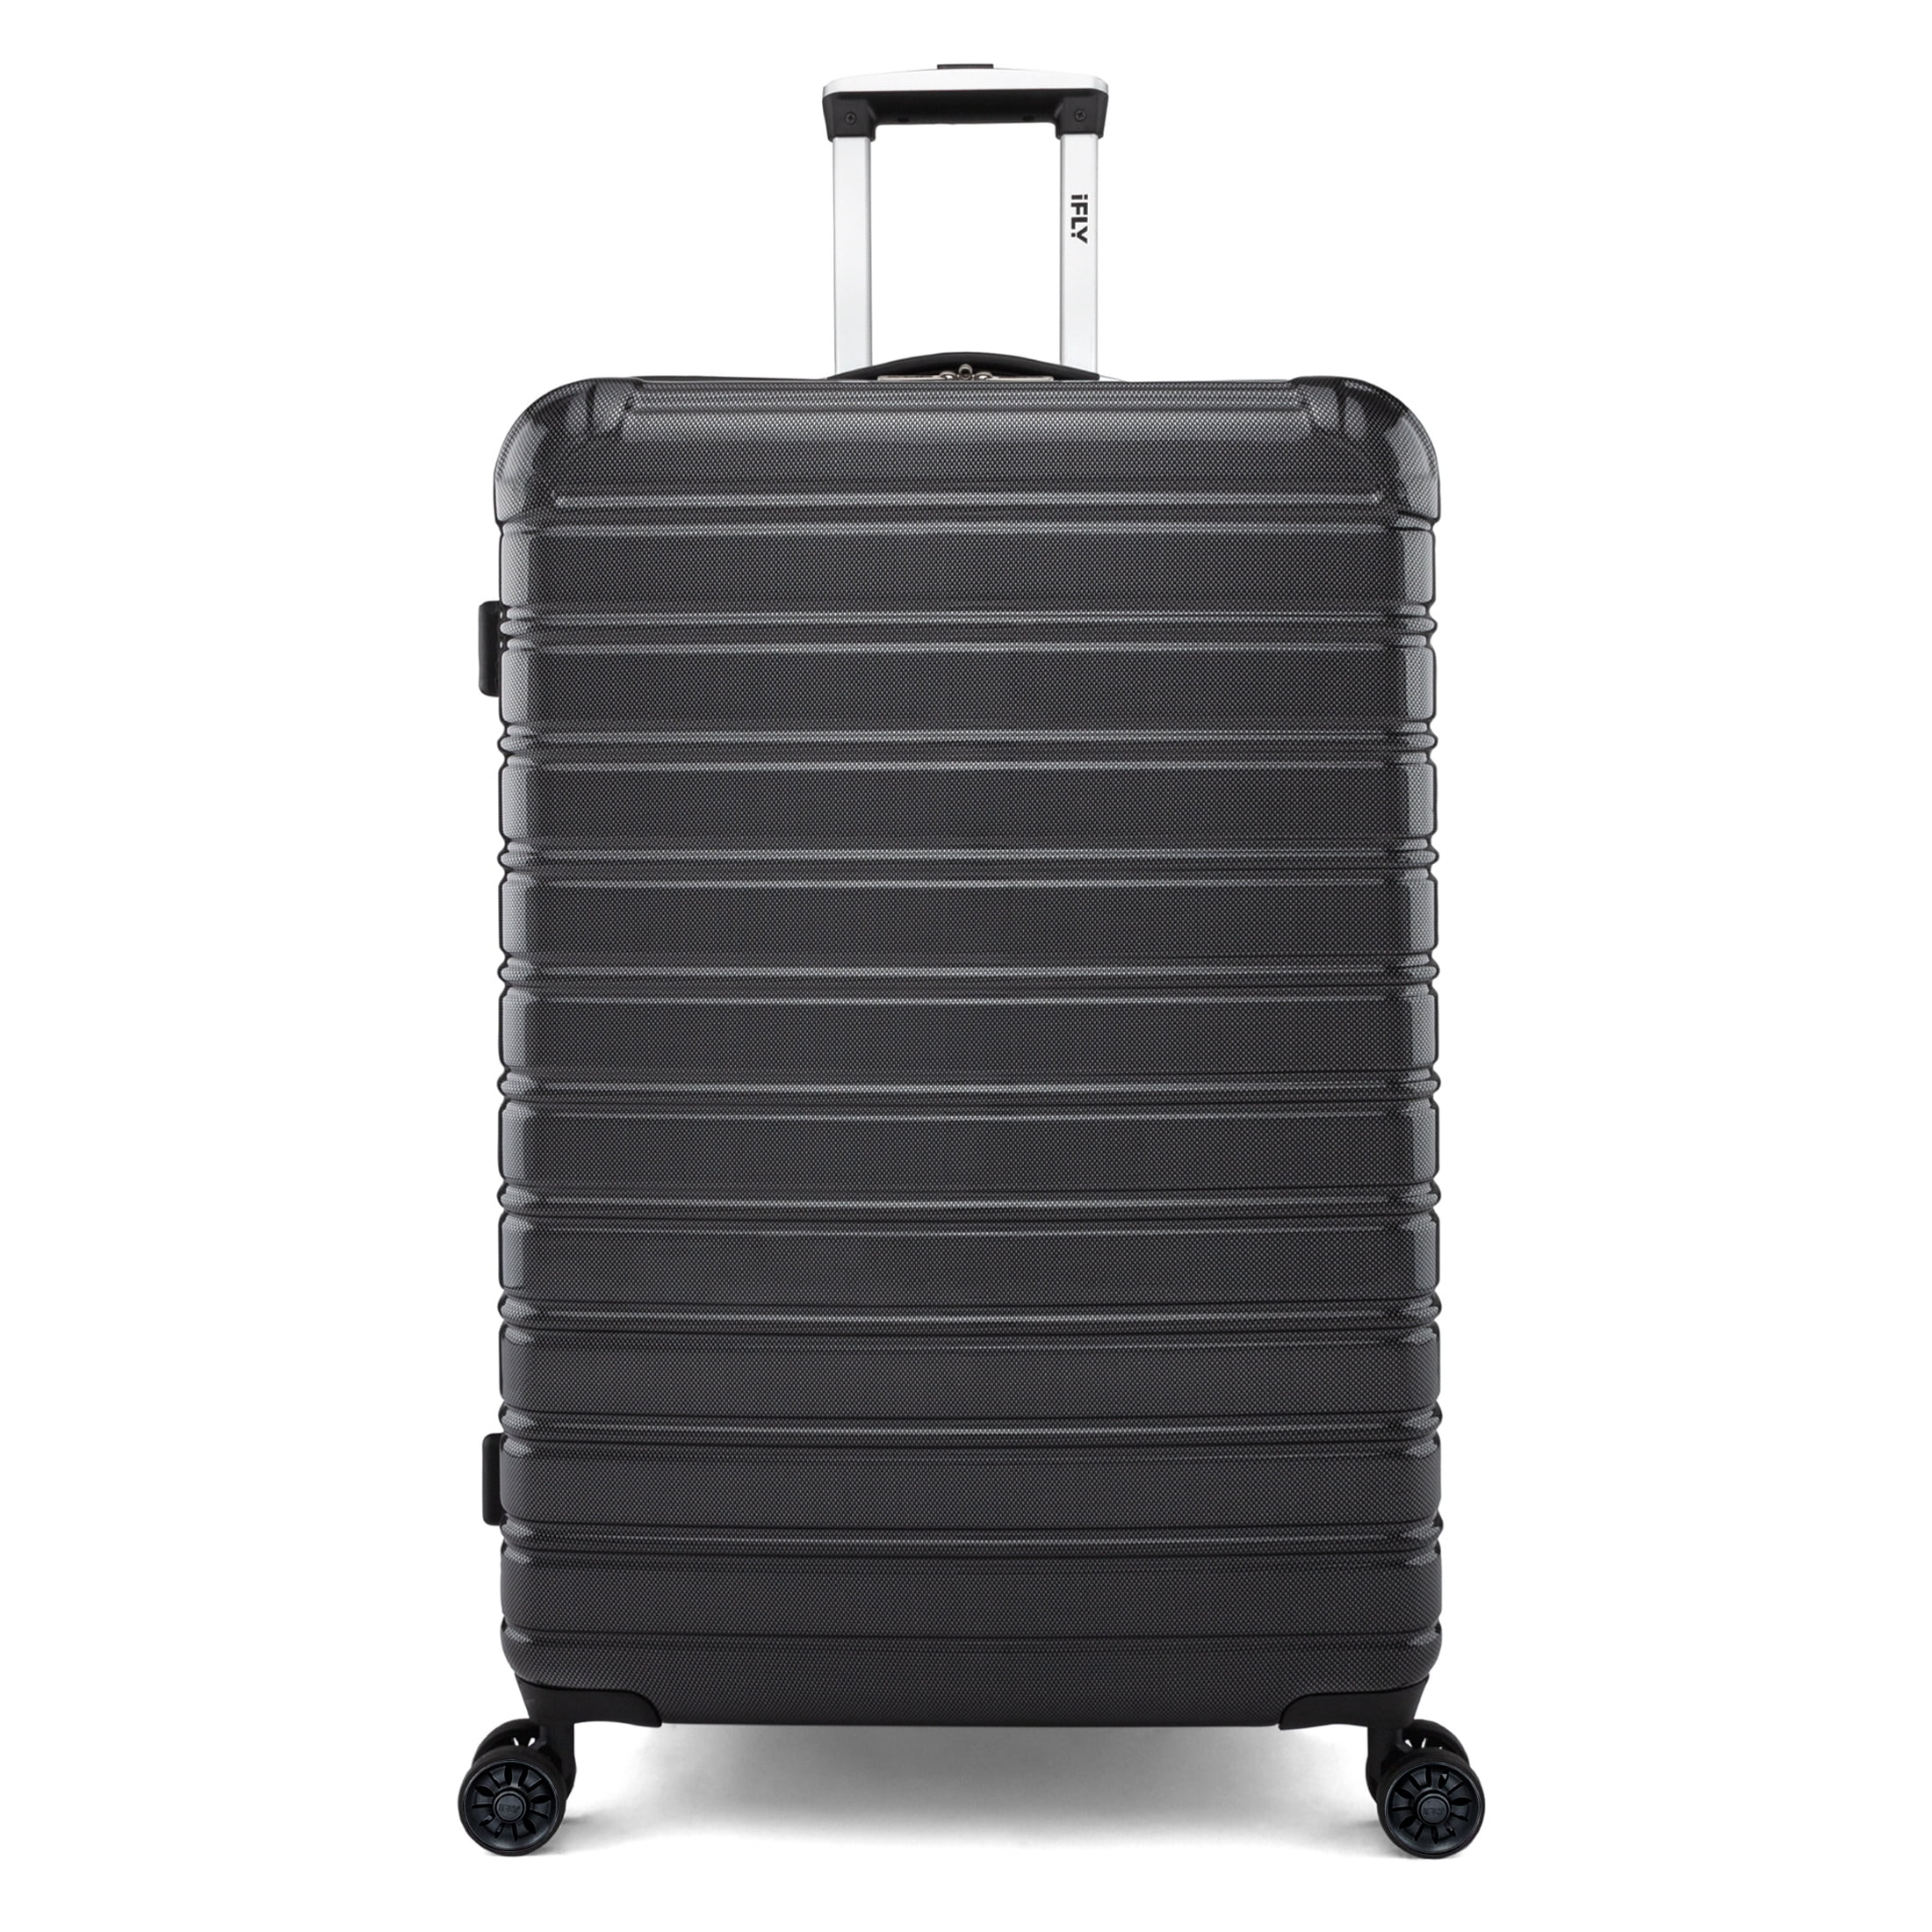 iFLY Hardside Fibertech Luggage, 28", Black Luggage